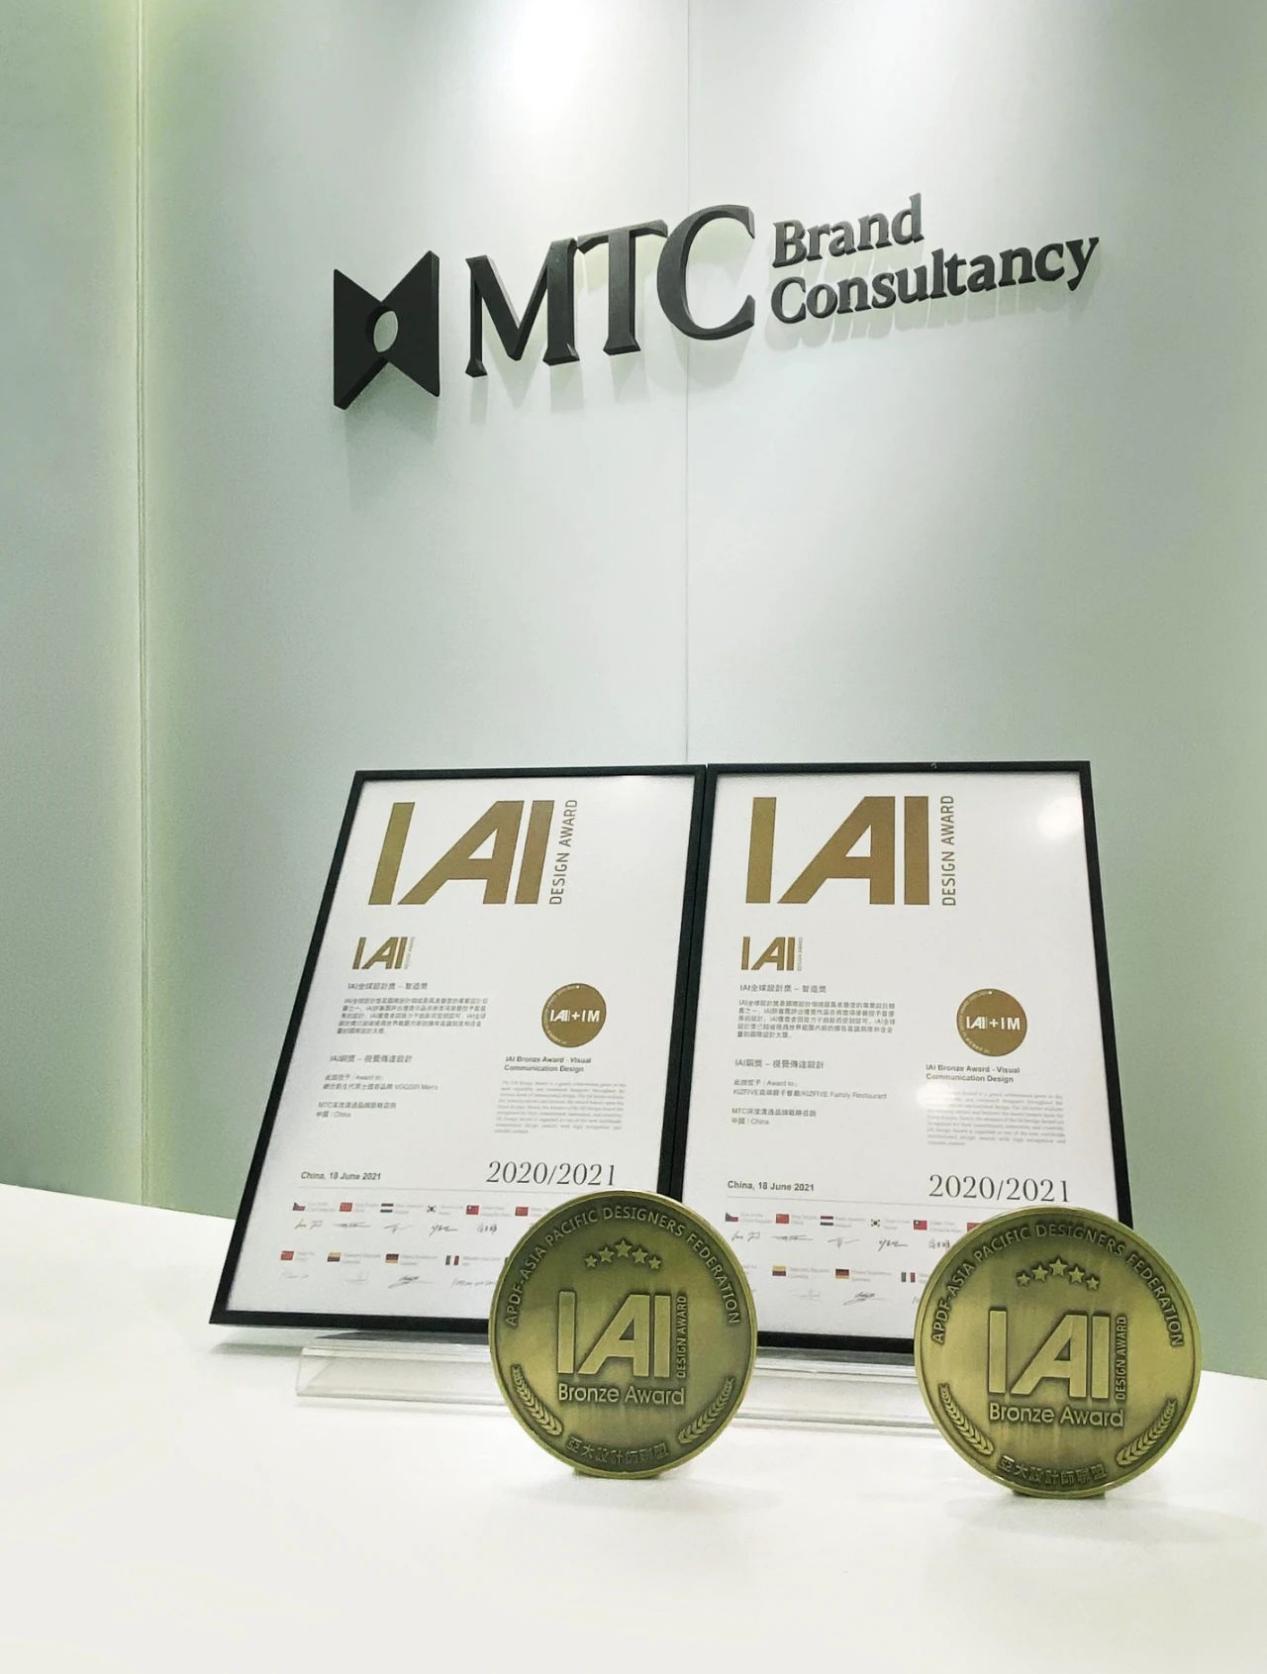 MTC深度沟通荣获两项IAI全球设计大奖